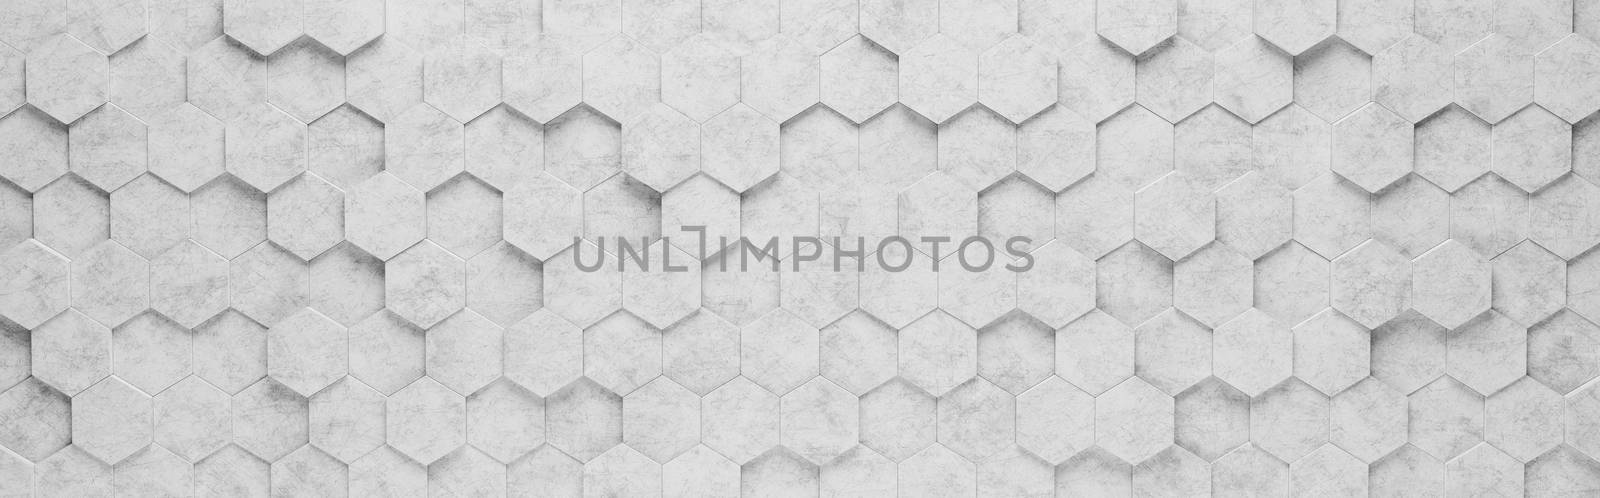 Wall of Gray Hexagon Tiles Arranged in Random Height 3D Background Illustration